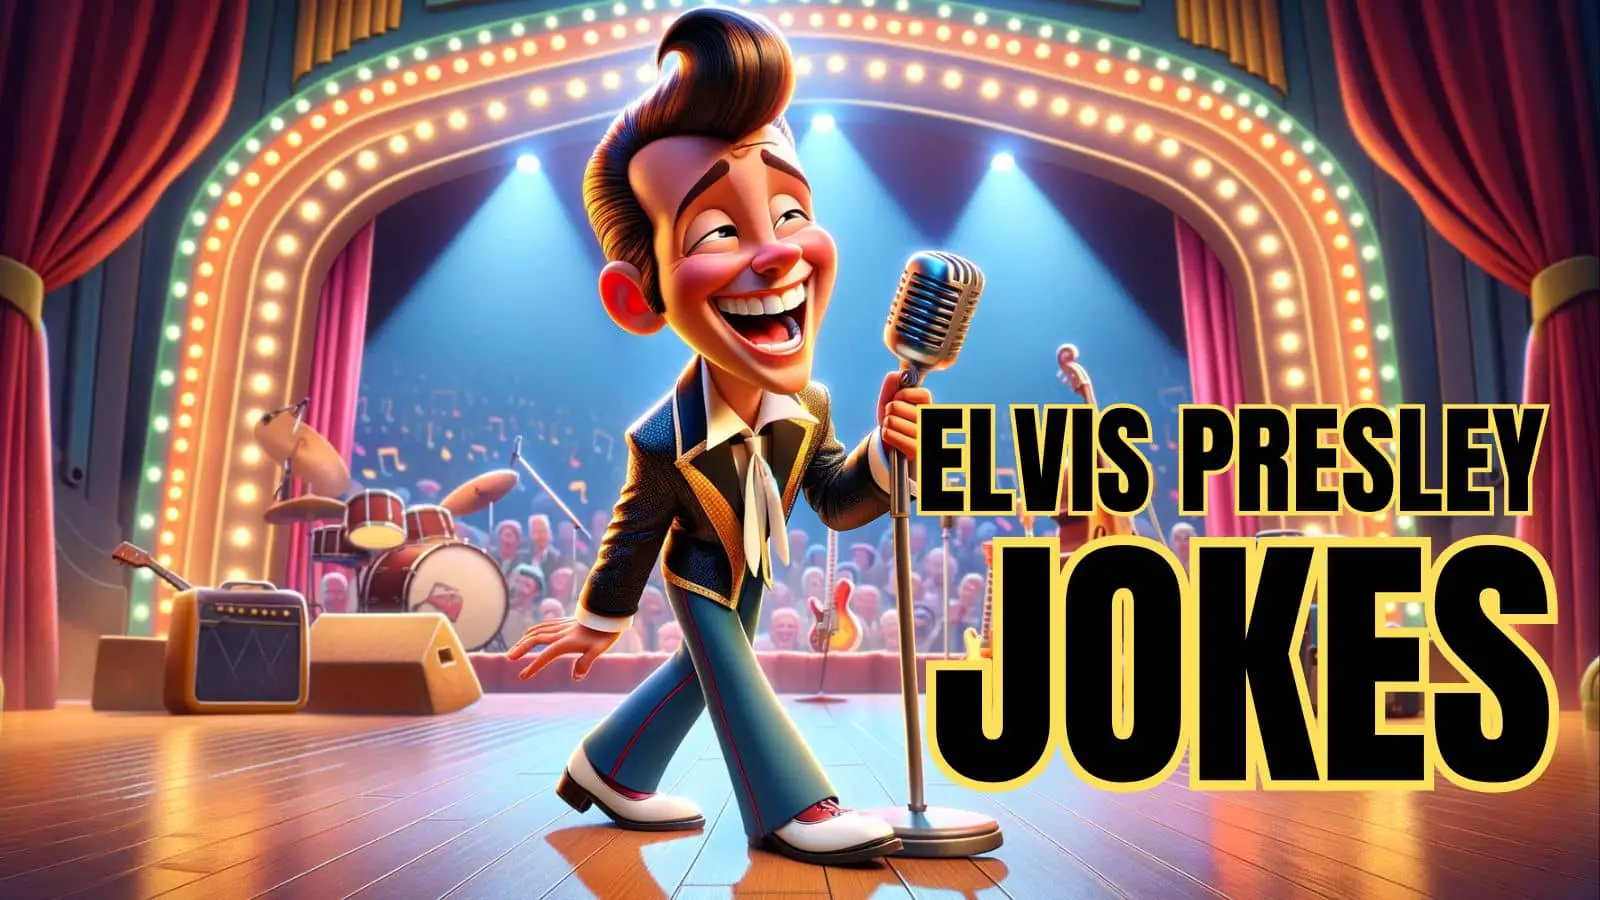 Funny Elvis Presley Jokes on Singer